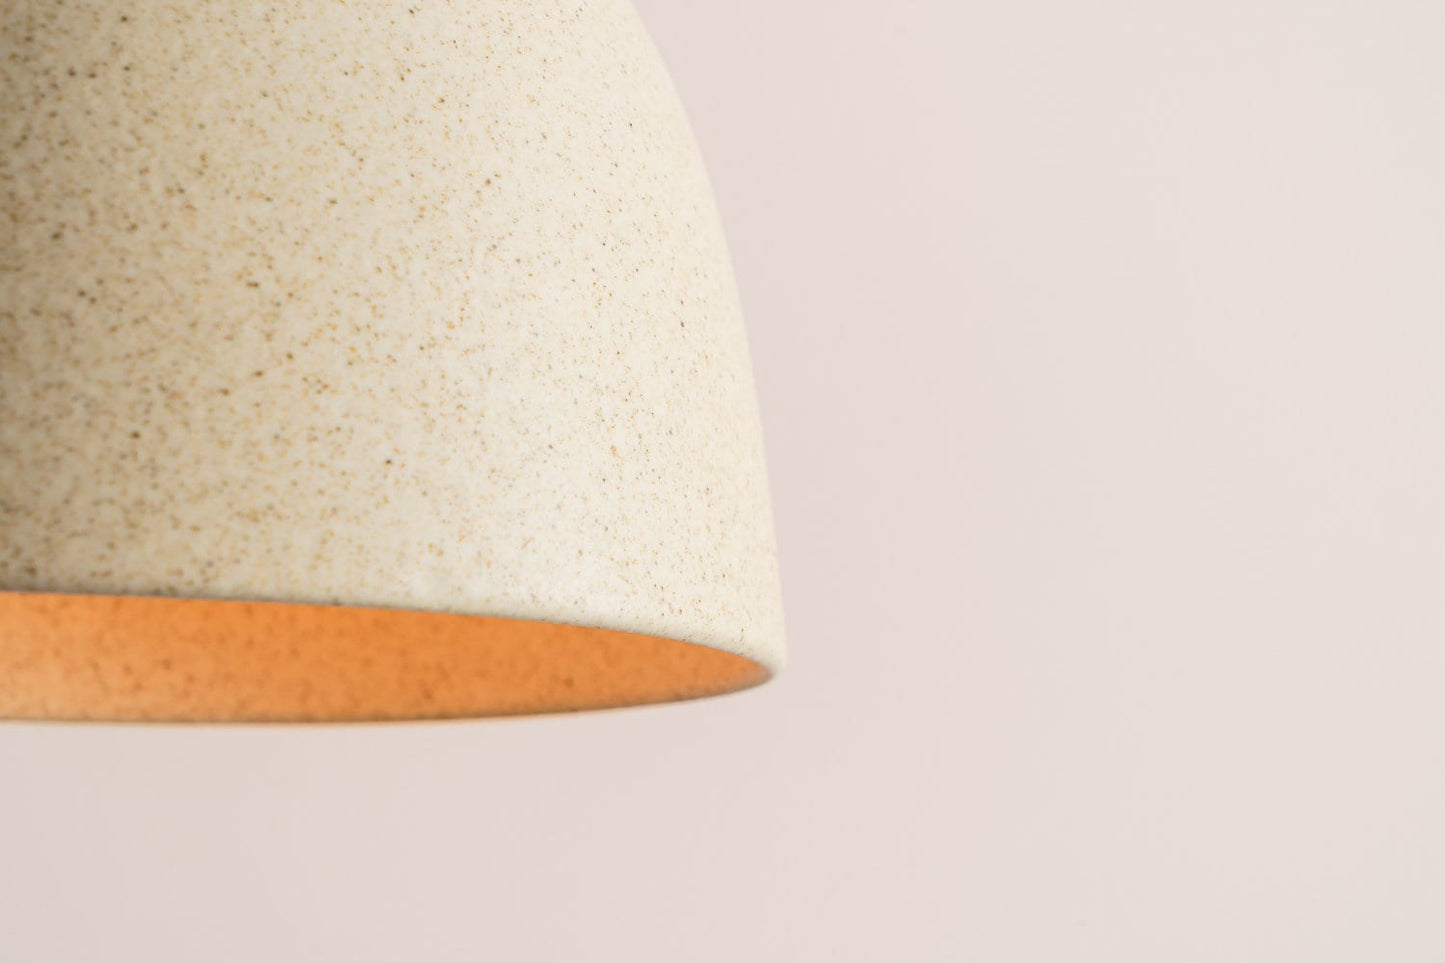 Element pendant light in a speckled cream glaze by StudioHaran